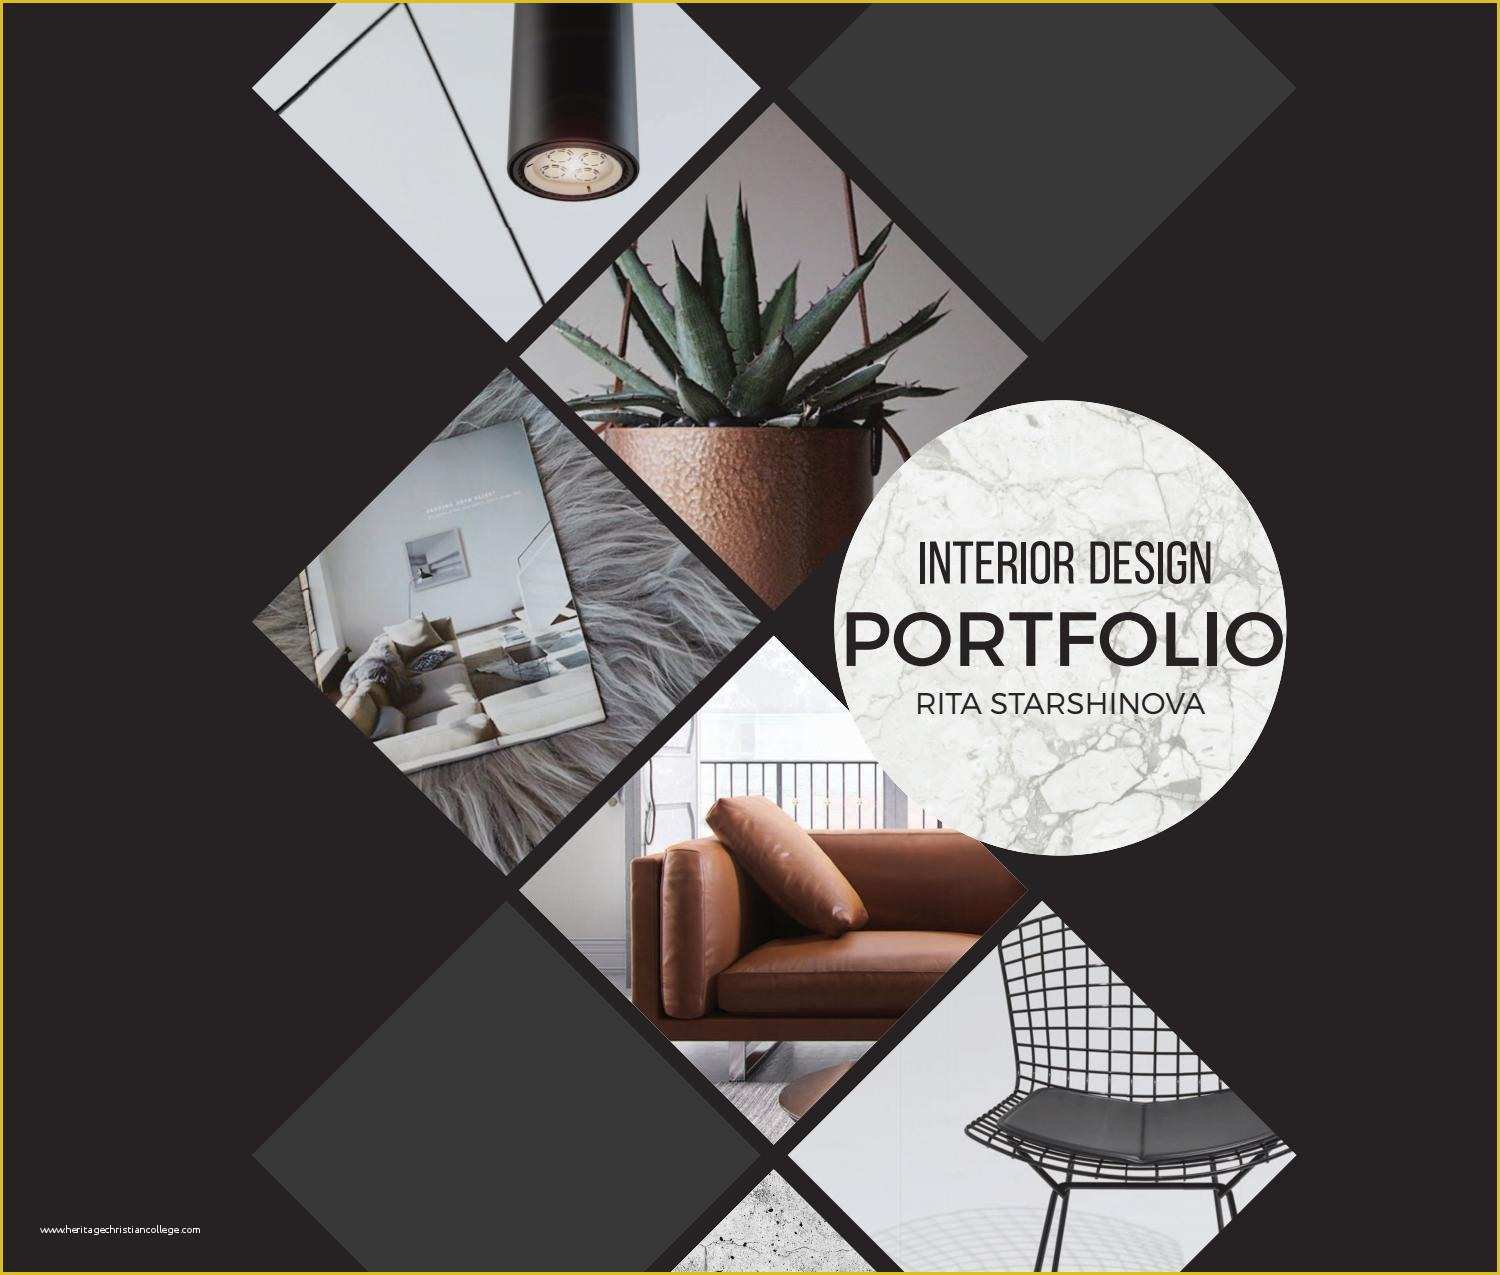 Interior Design Portfolio Templates Free Download Of Rita Starshinova Portfolio by Rita Starshinova issuu